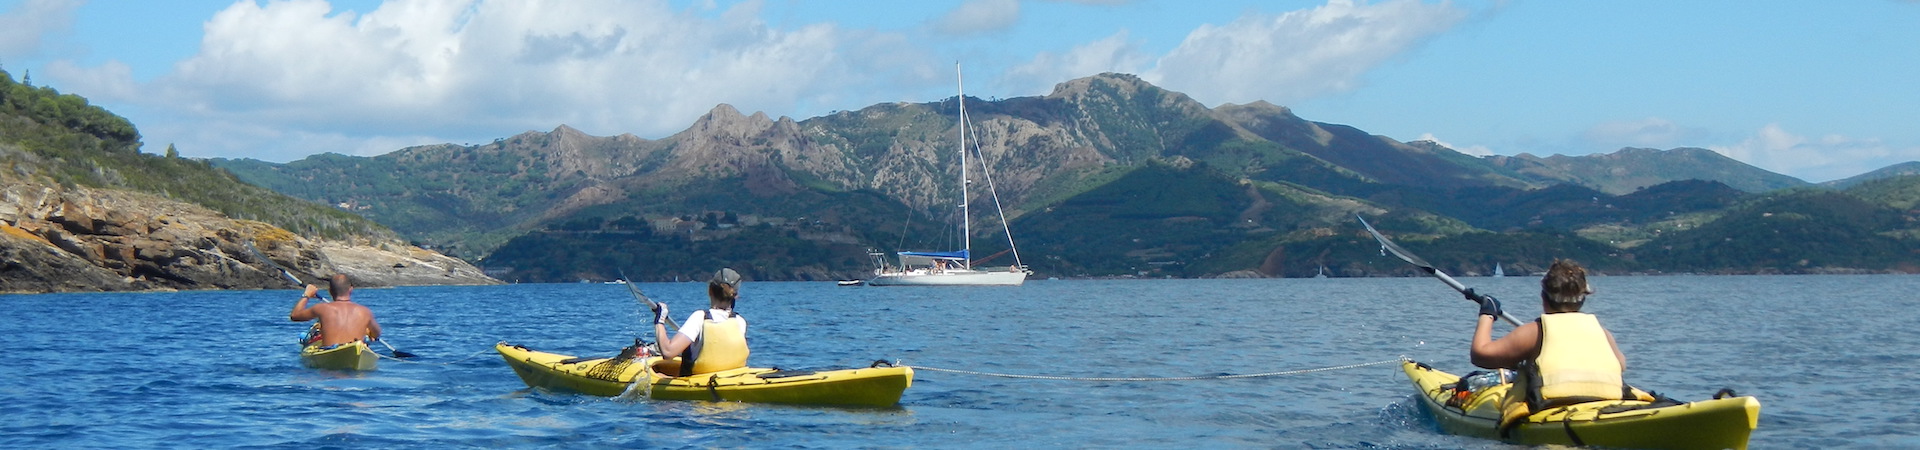 vacanza in barca a vela e kayak